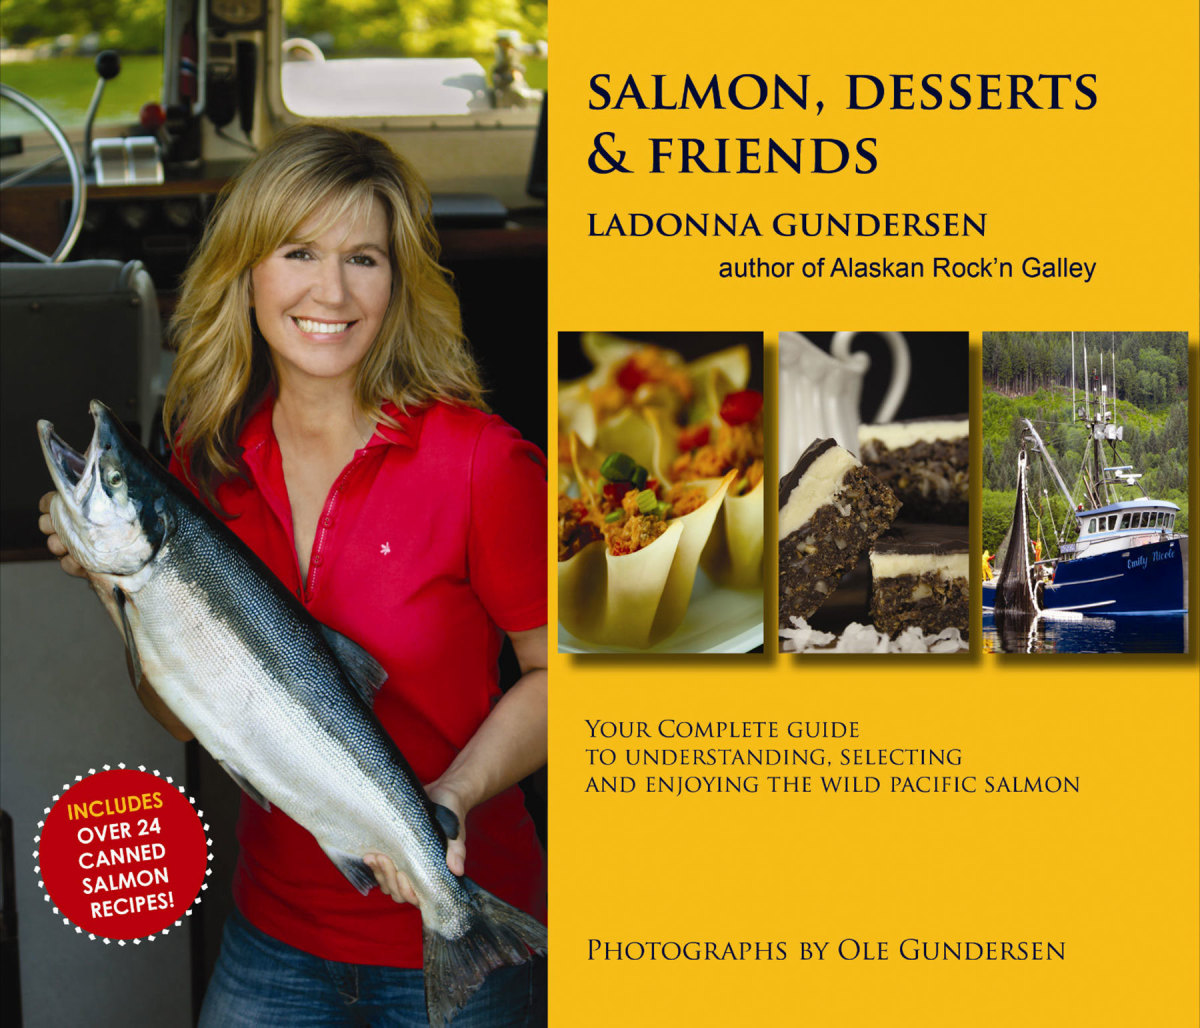 Salmon-Desserts-&-Friends-book-cover-lg